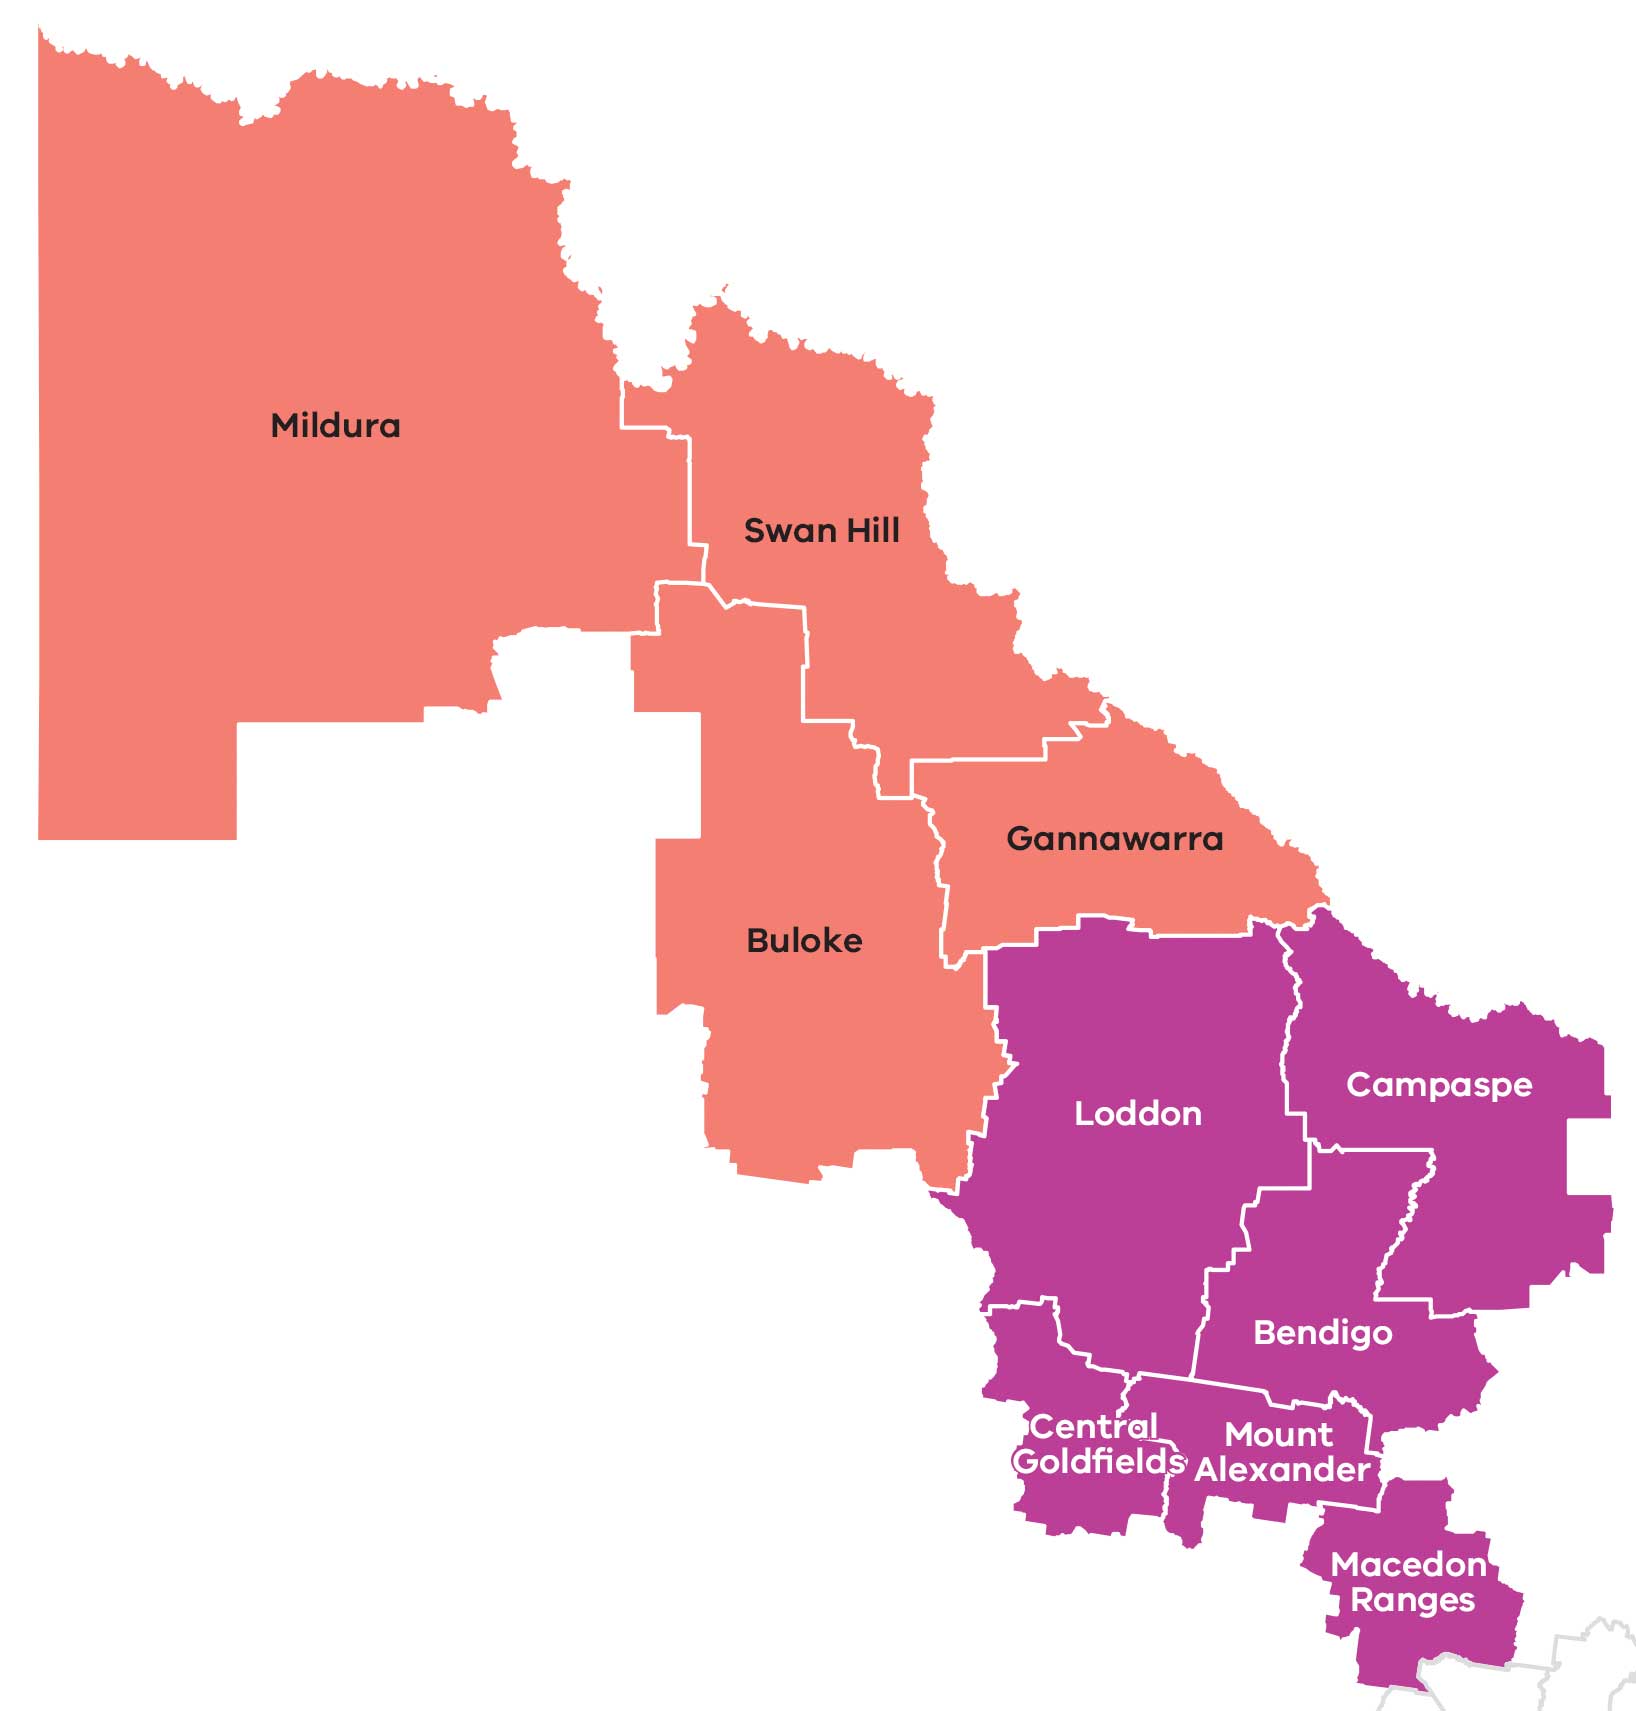 Map of the Loddon Mallee region in Victoria